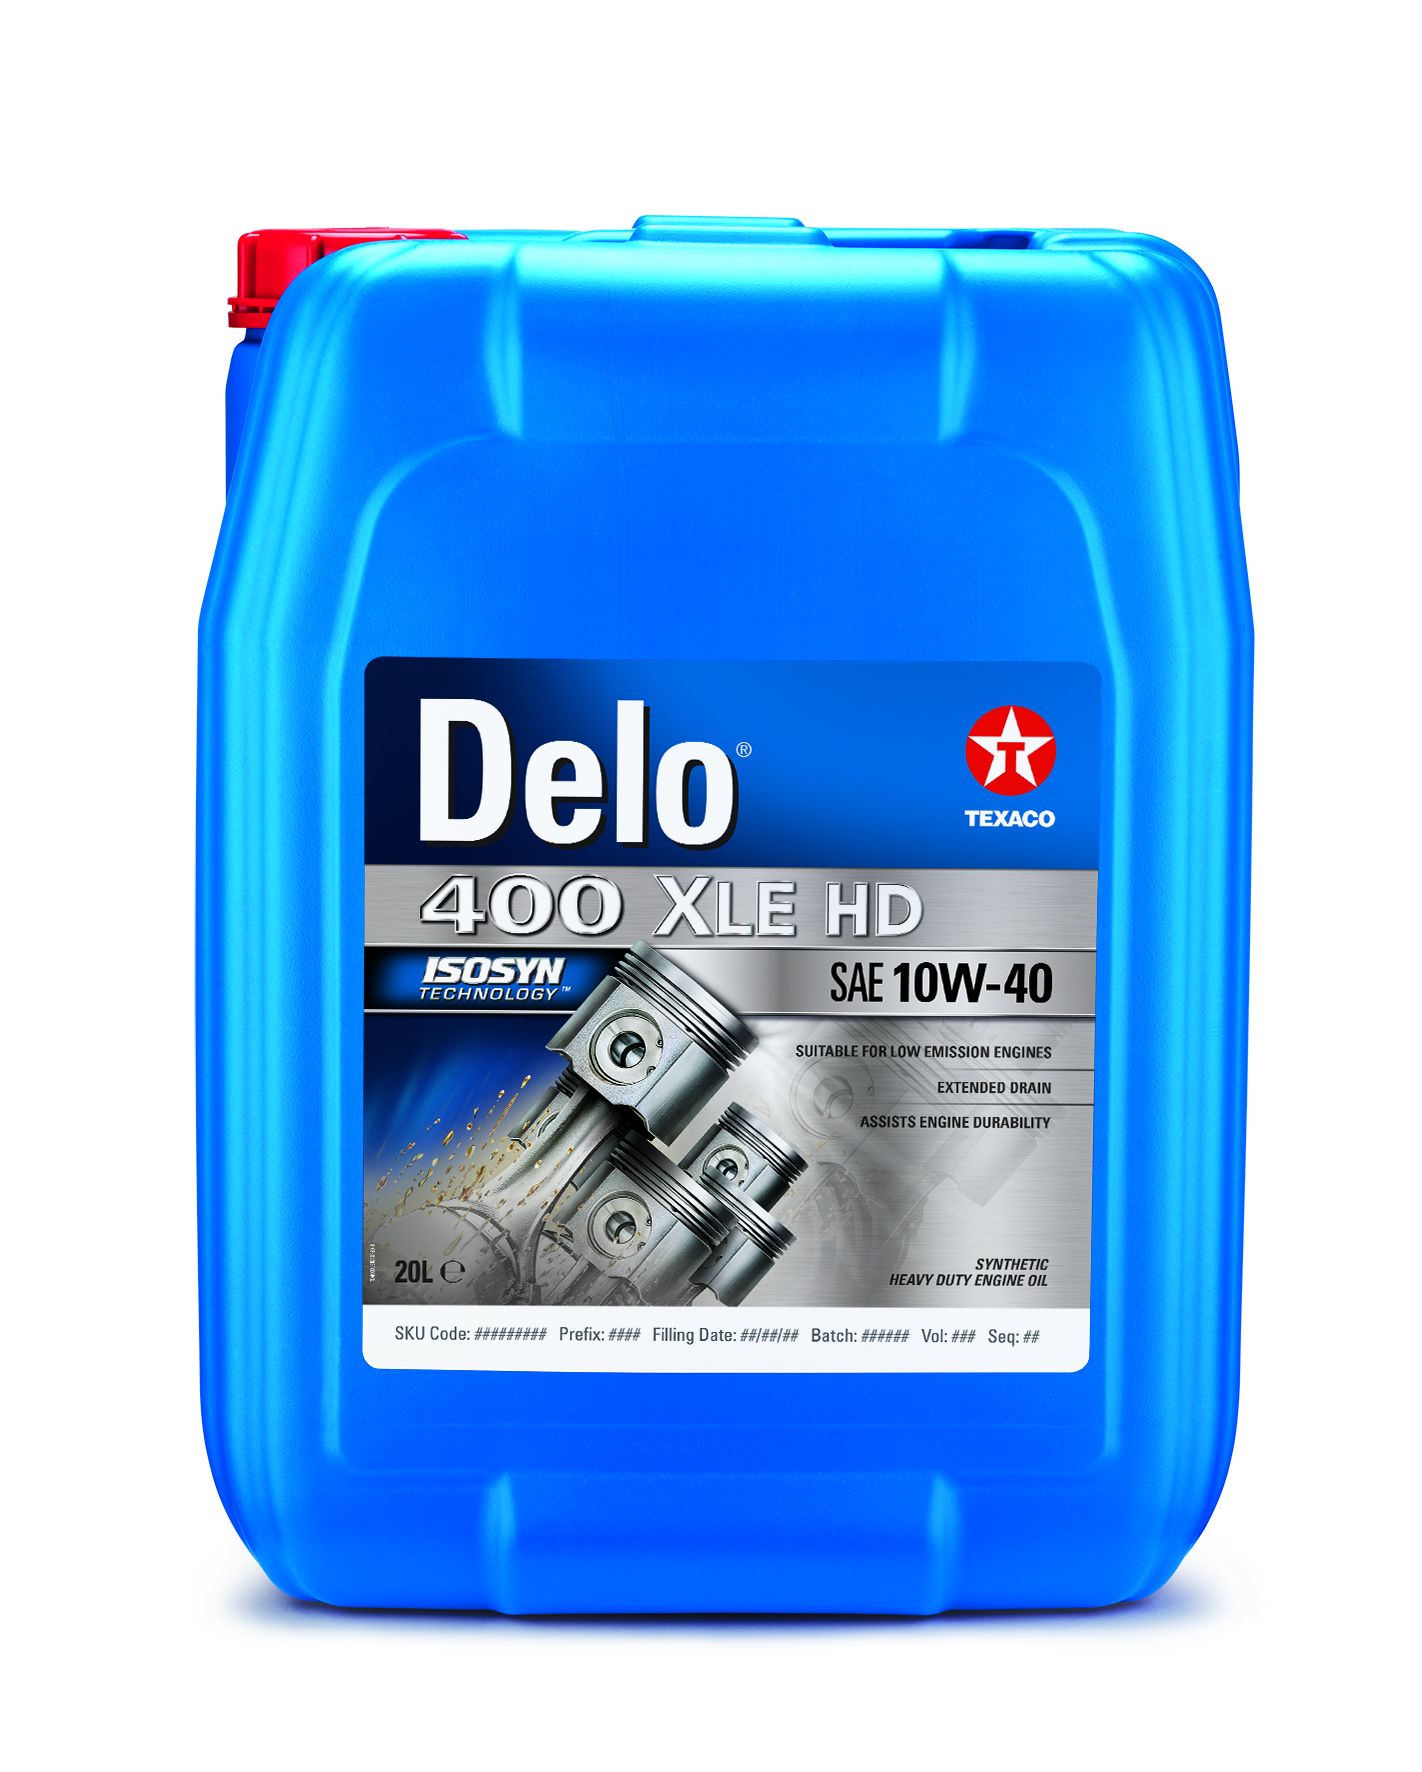 DELO 400 XLE HD 10W-40 